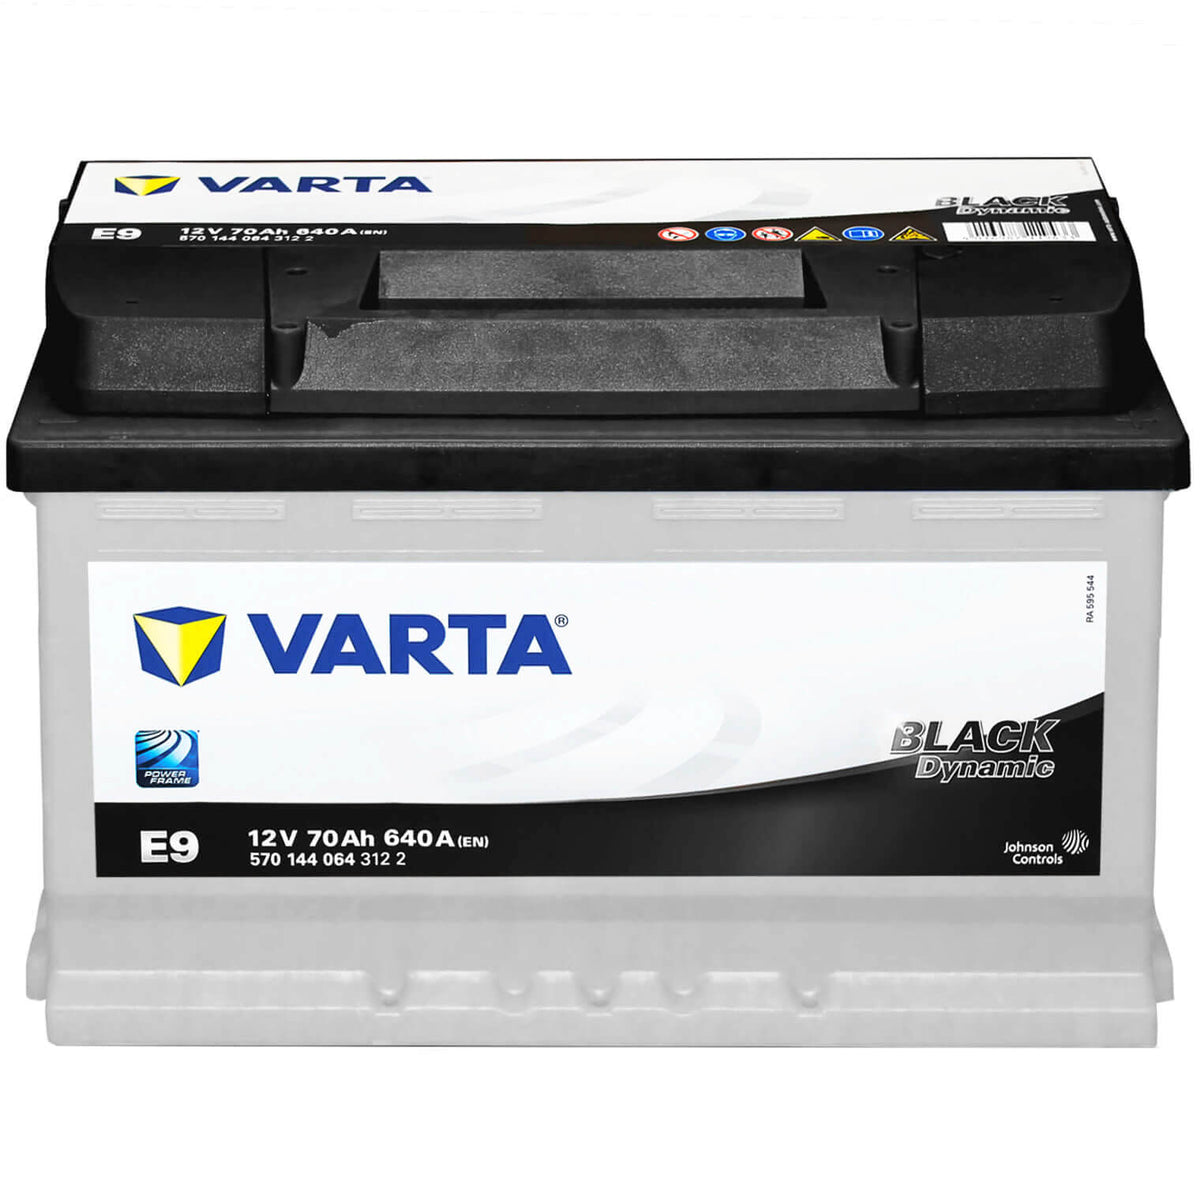 Varta E9 Black Dynamic 12V 70Ah 640A/EN